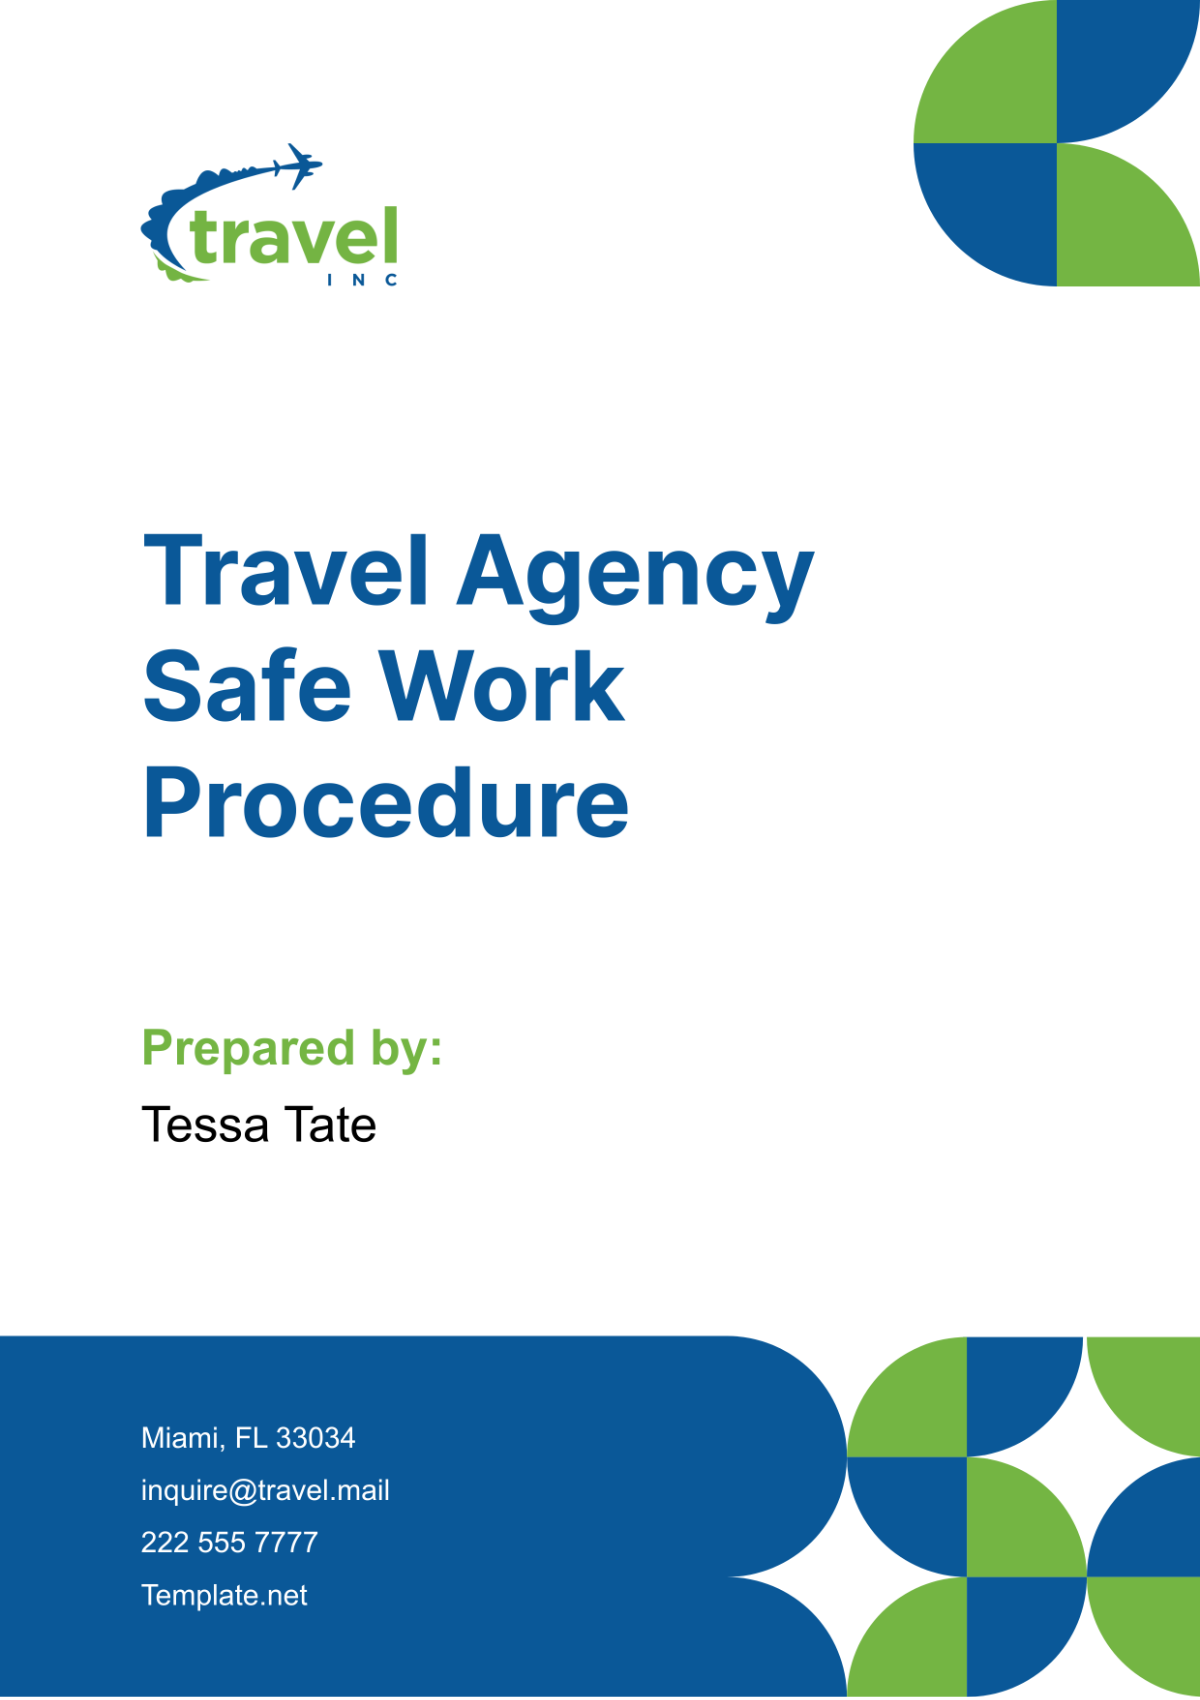 Travel Agency Safe Work Procedure Template